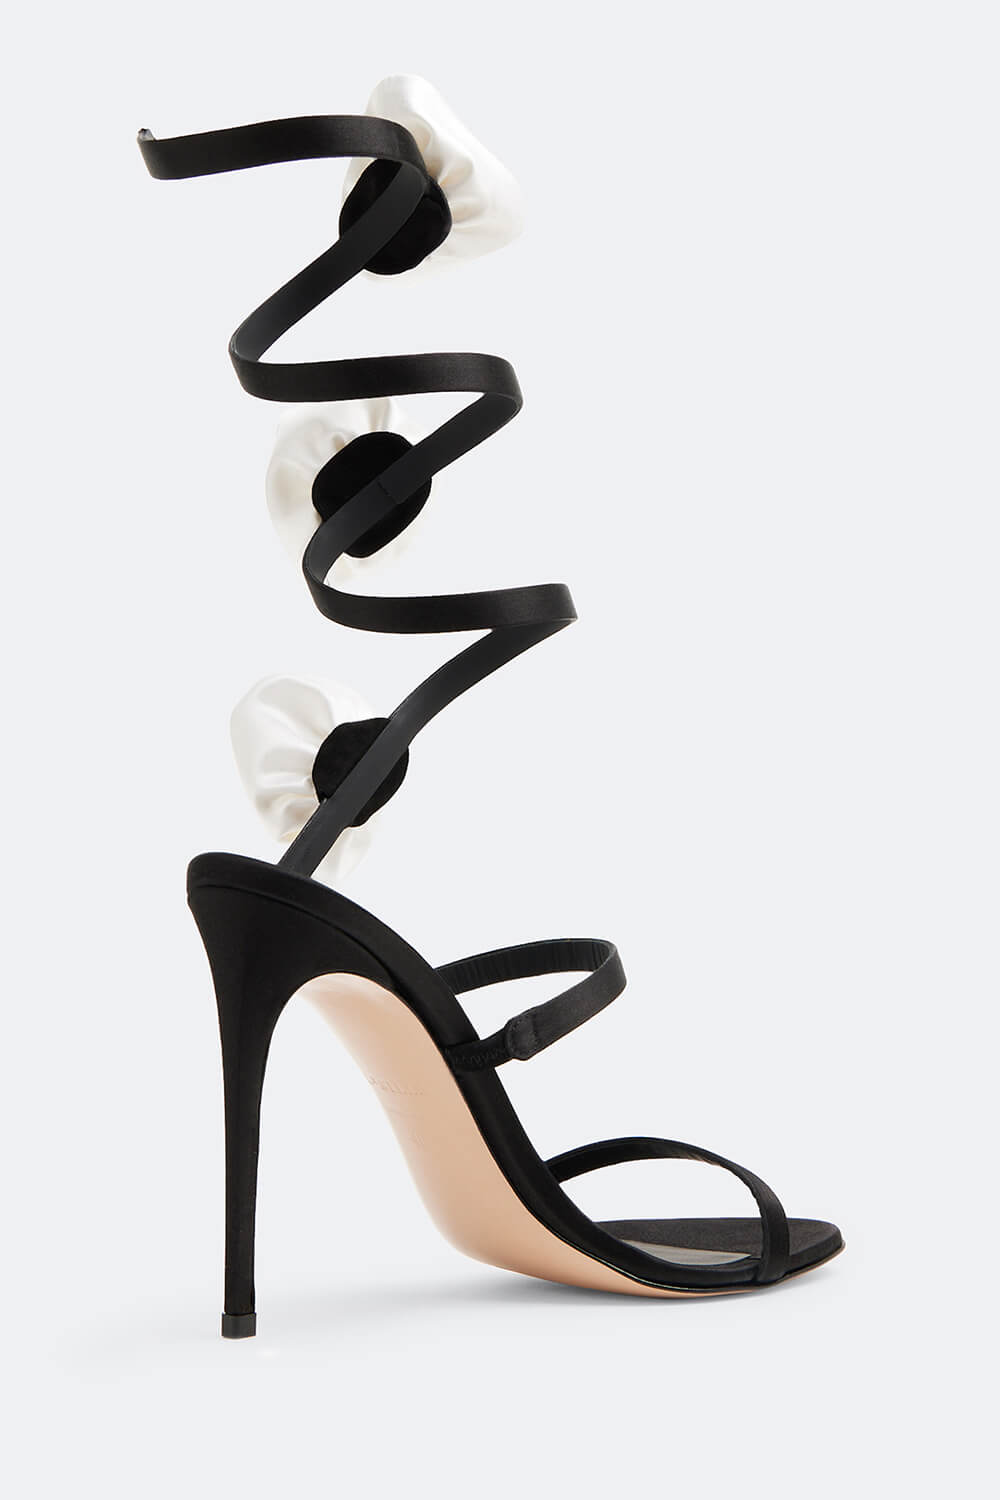 Black Satin Wrap-Around High-Heel Sandals With White Roses Detailing